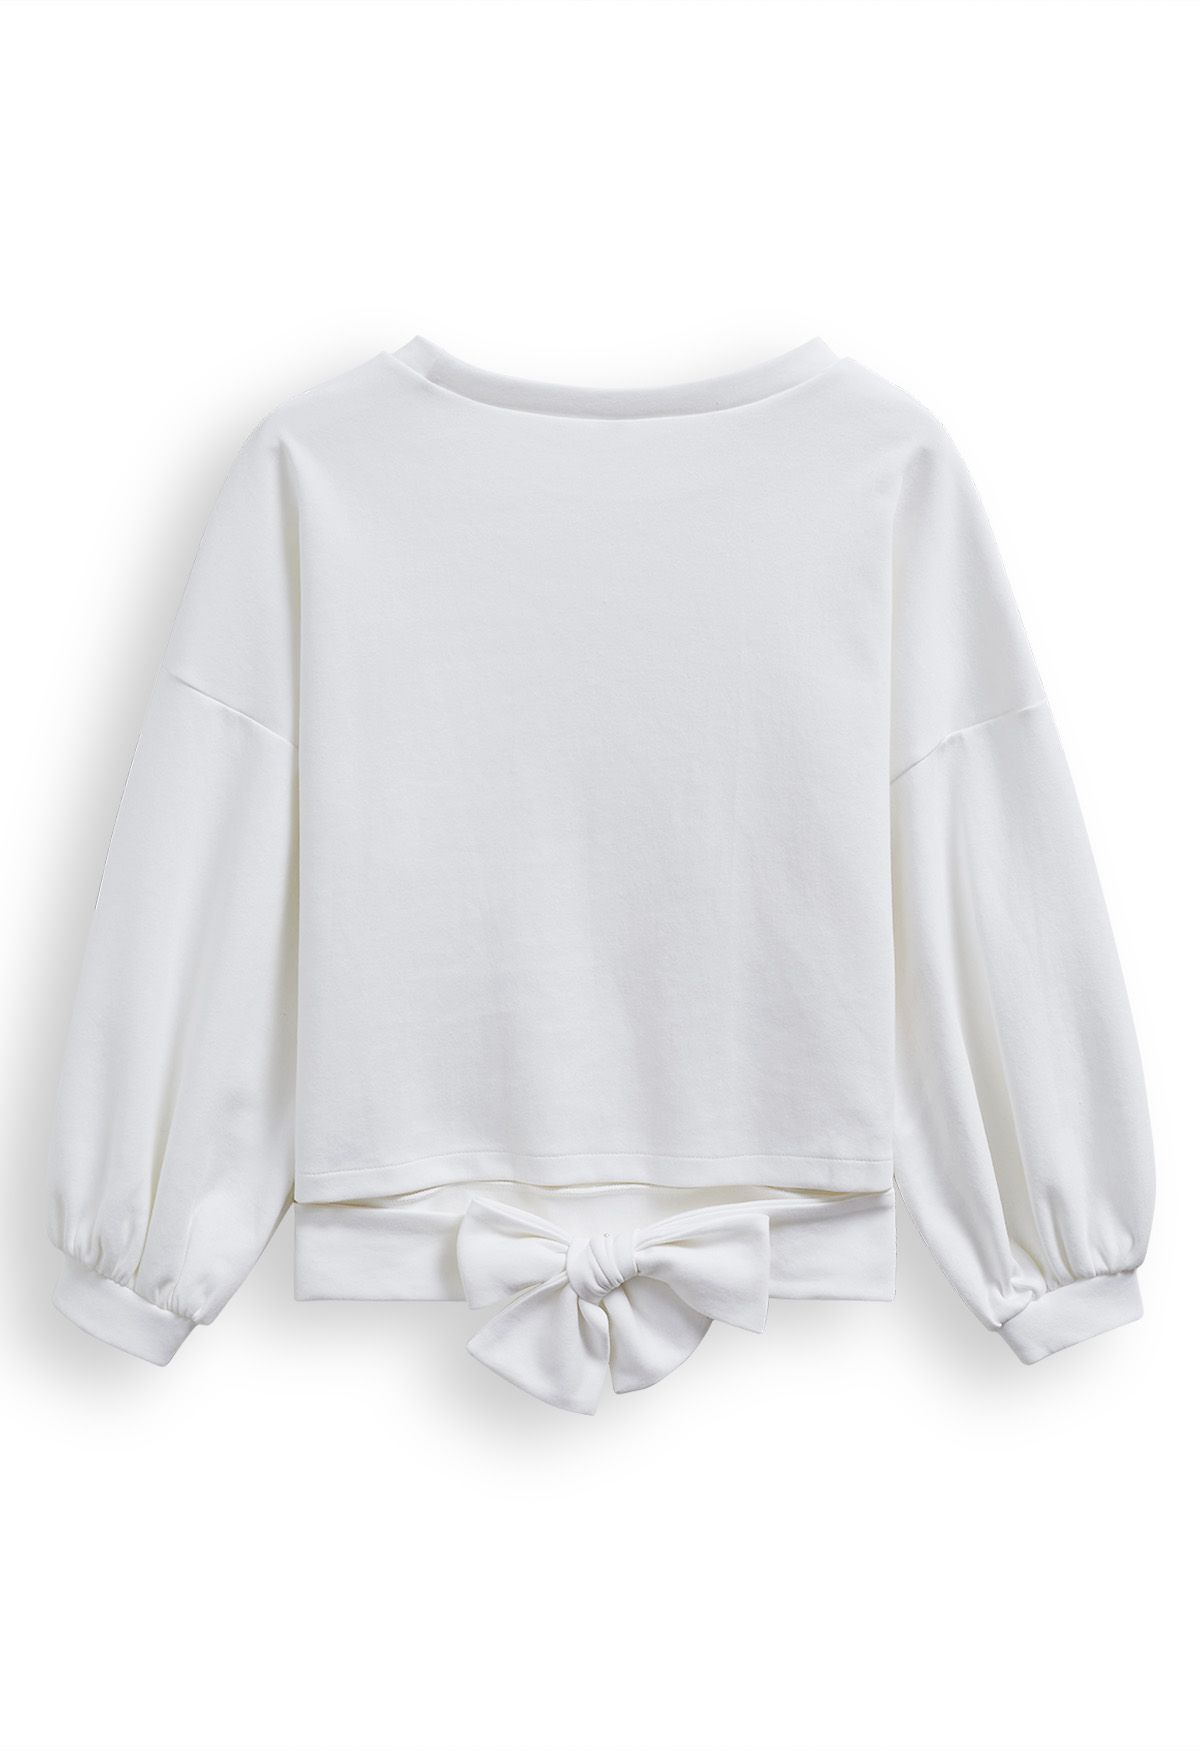 Bowknot Back Cotton Sweatshirt in White